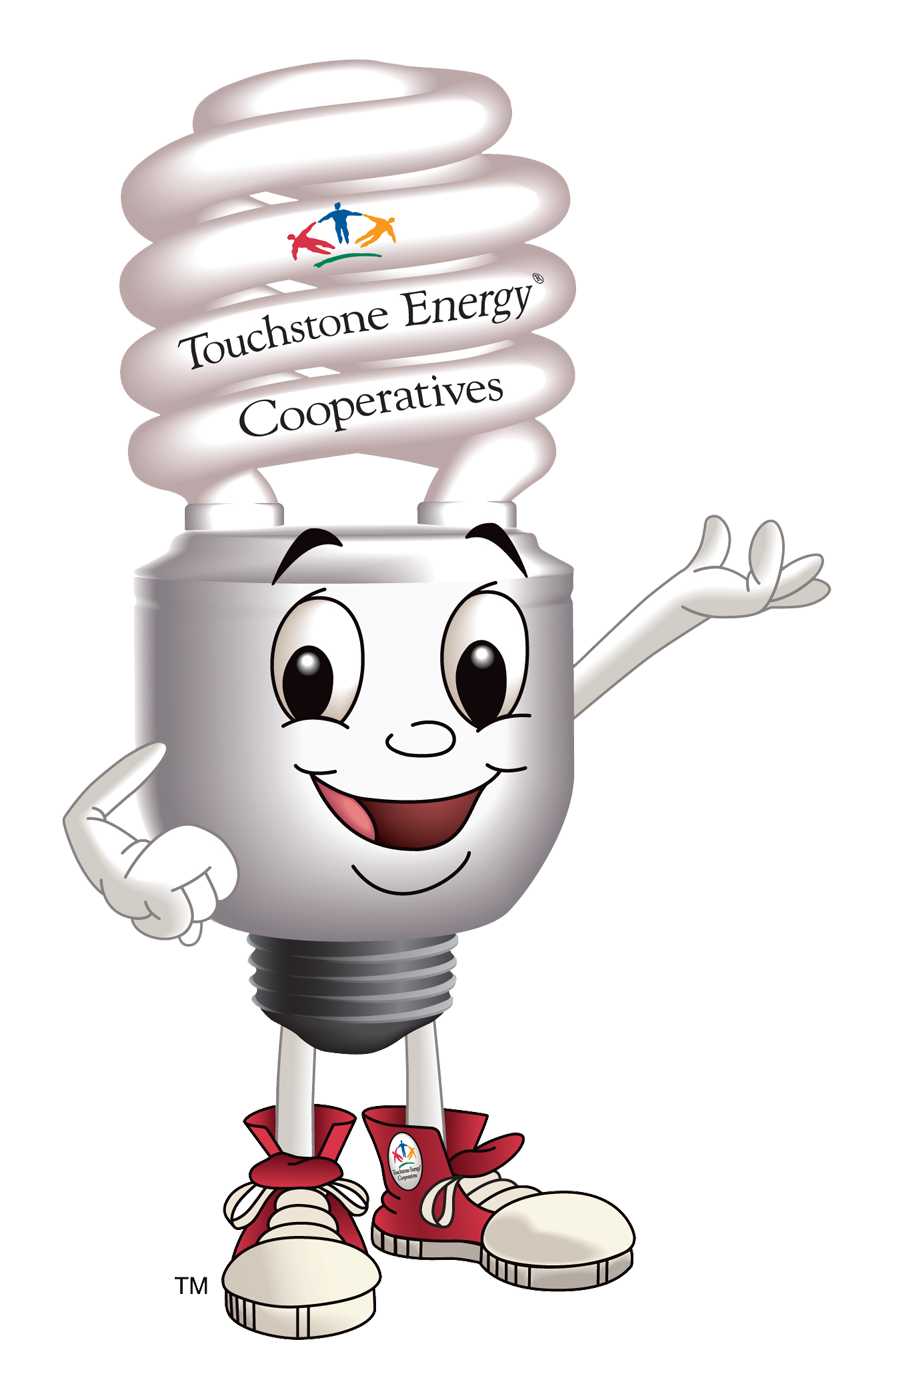 Touchstone Energy Cooperatives light bulb cartoon